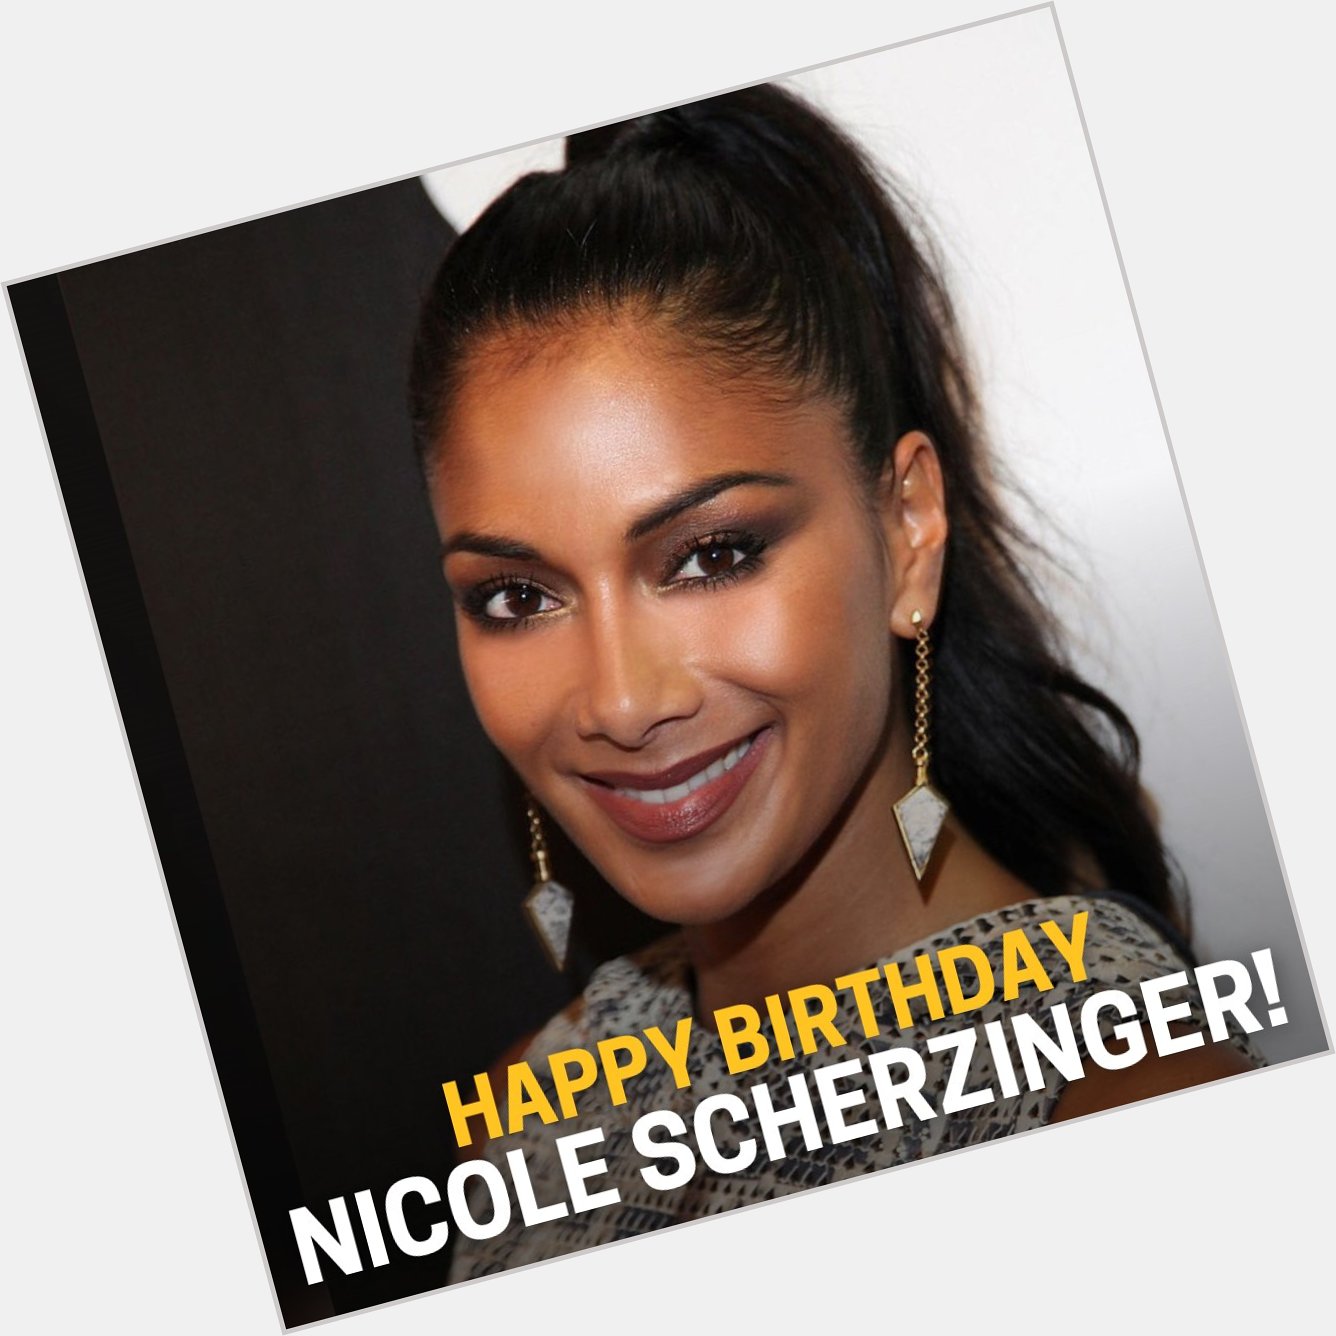 Happy birthday to graduate and Pussycat Dolls lead singer Nicole Scherzinger! 